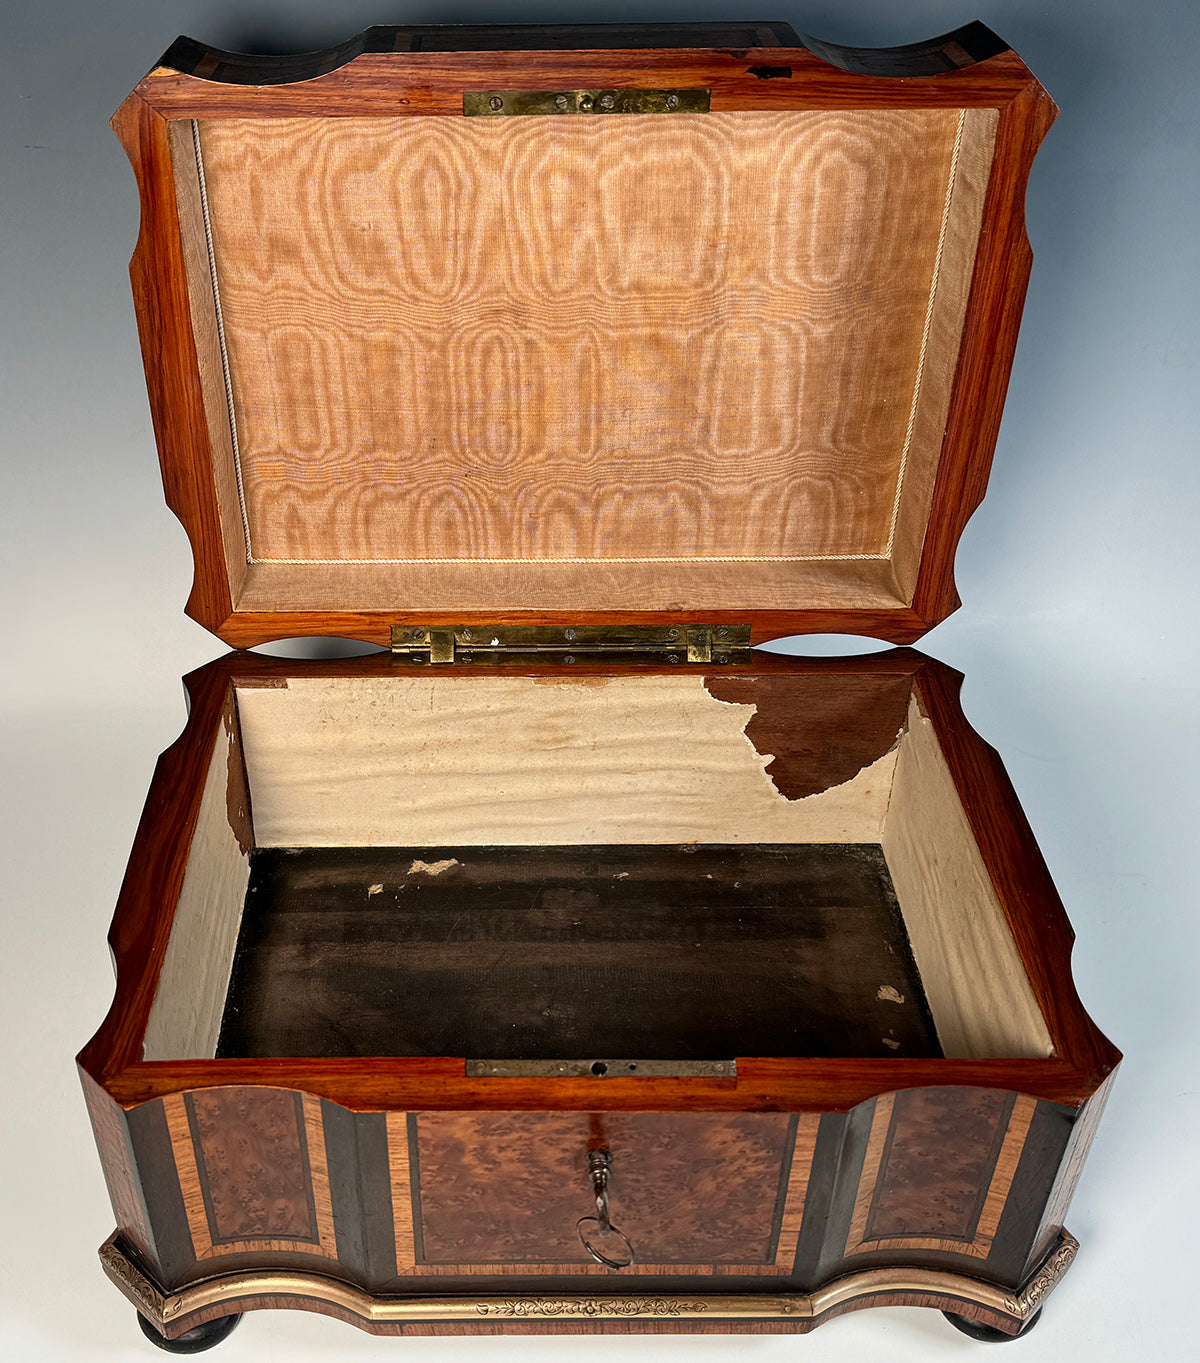 Large Antique French NAPOLÉON III Era Trousseau or Jewelry Chest, Box, Casket 13.75"